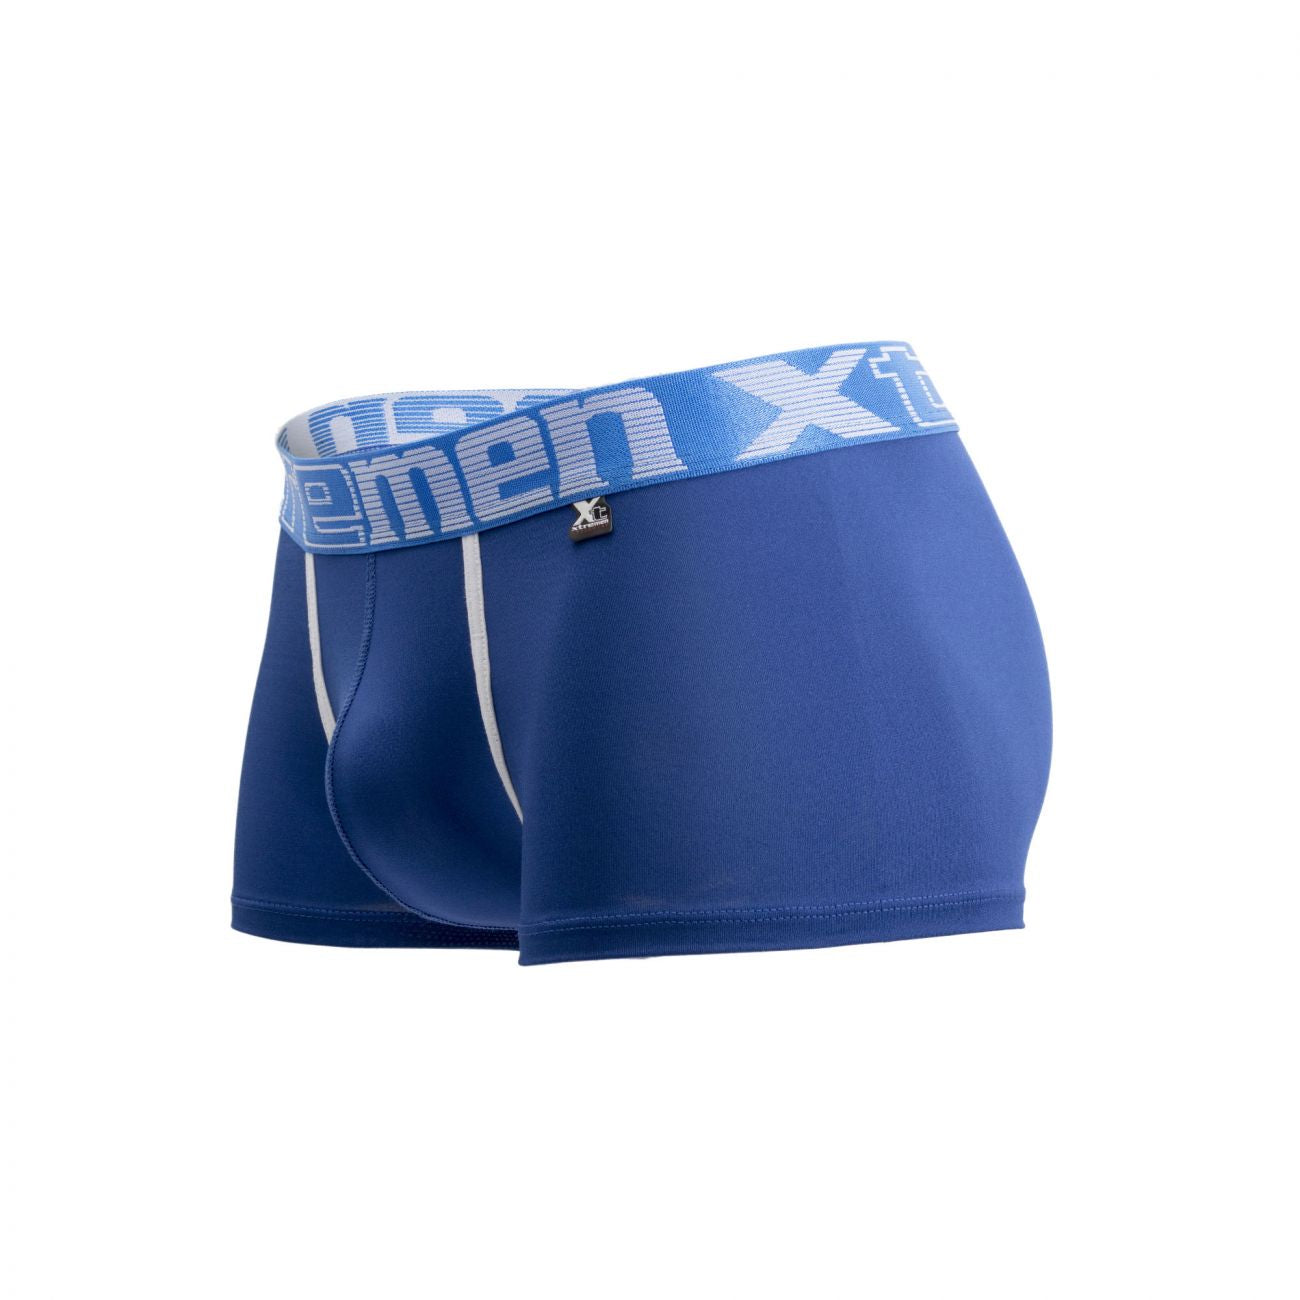 Xtremen 91028 Piping Boxer Briefs